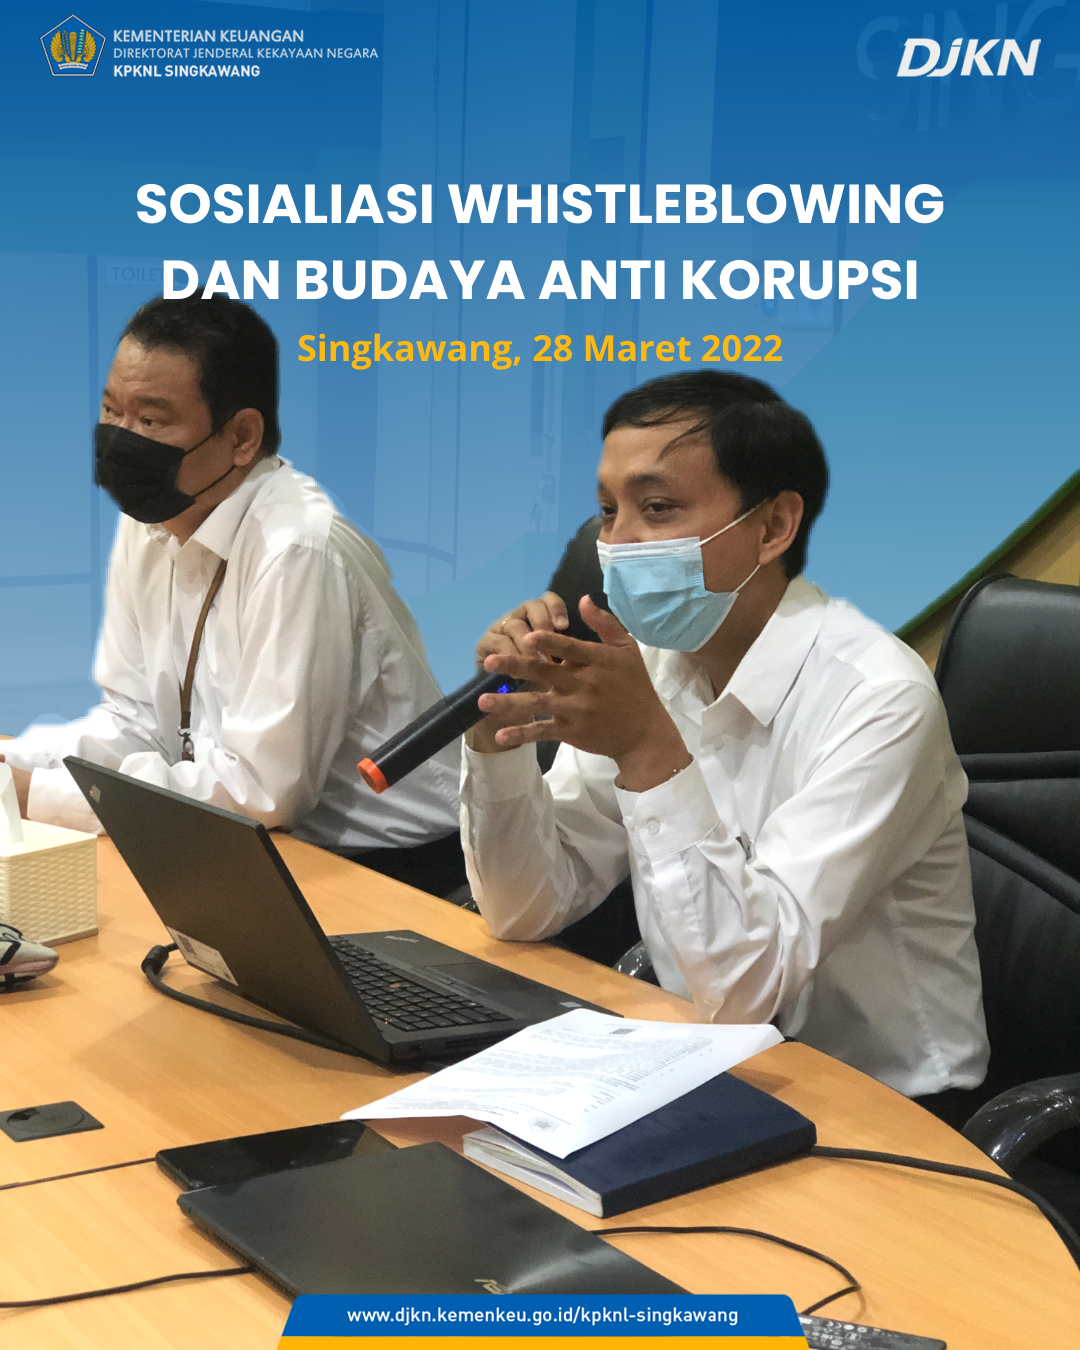 Sosialisasi Whistleblowing dan Budaya Anti Korupsi di KPKNL Singkawang